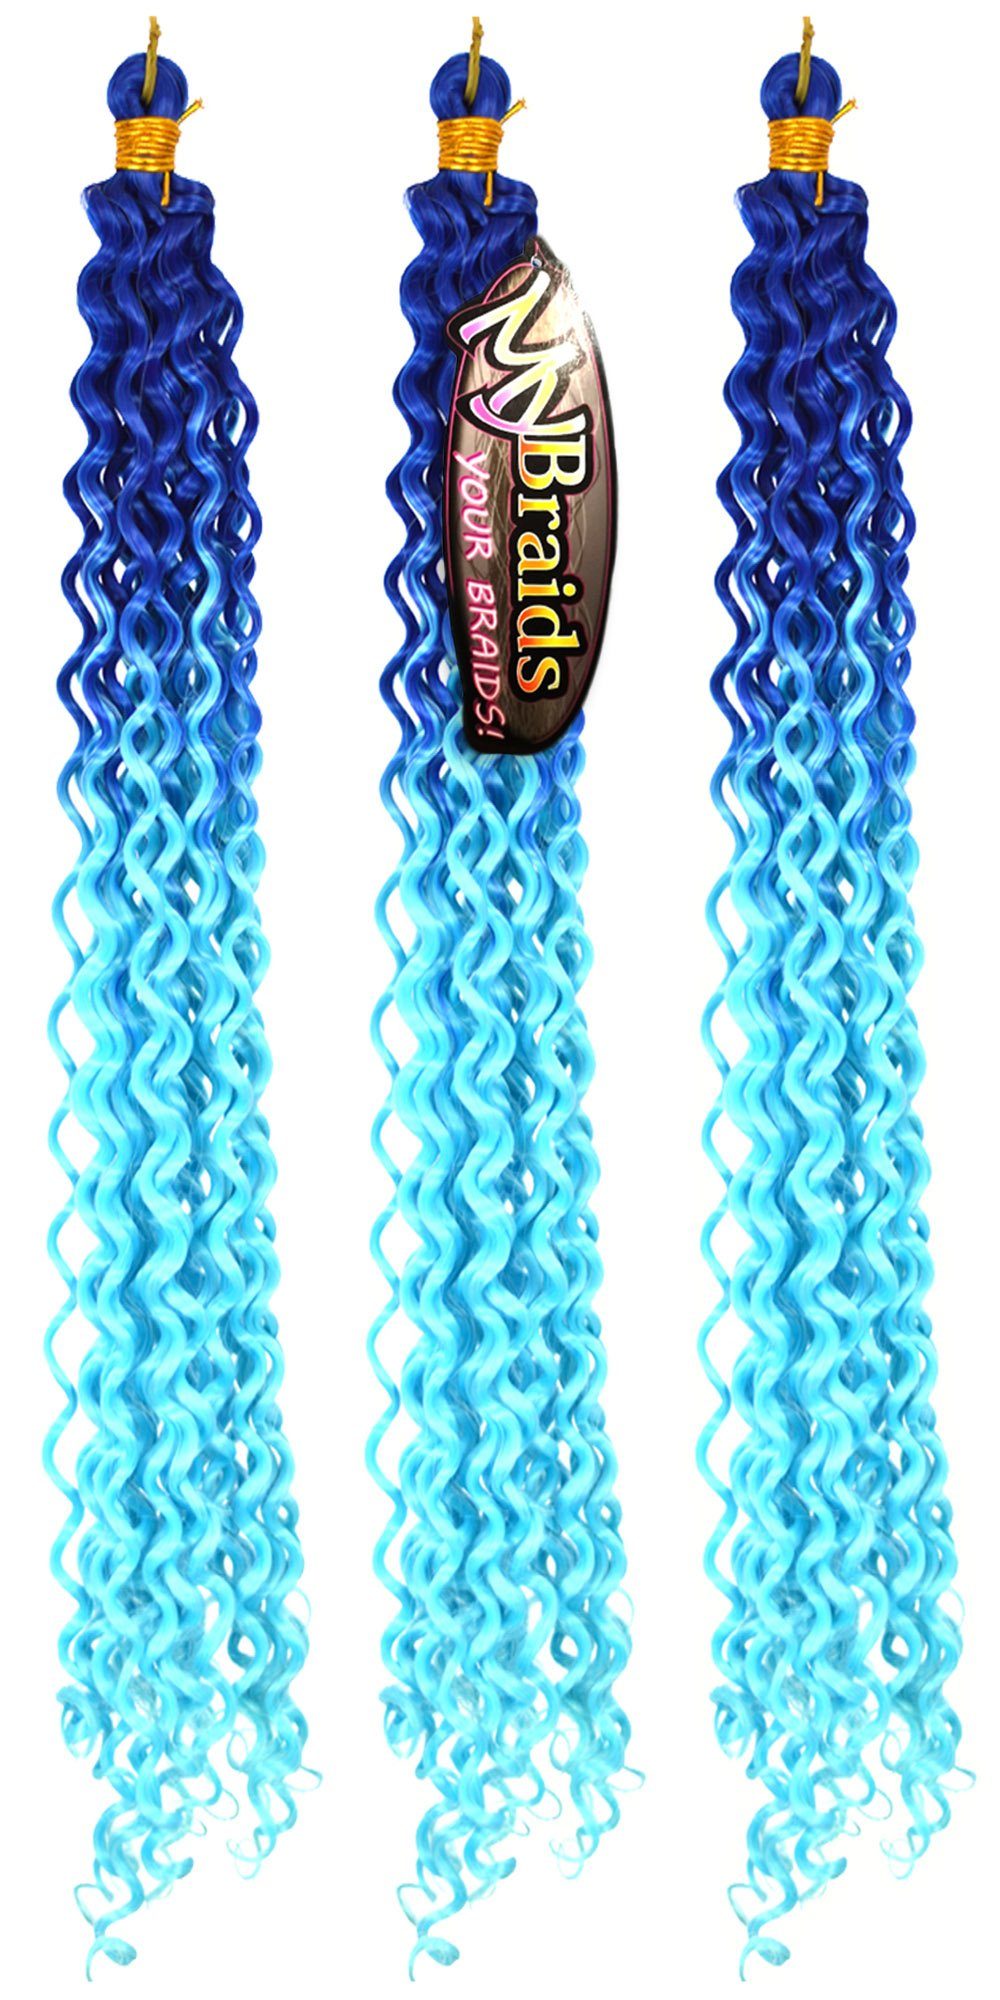 Wellig Deep Blau-Hellblau YOUR Zöpfe Pack Kunsthaar-Extension 3er Crochet Ombre Wave BRAIDS! Braids Flechthaar MyBraids 15-WS